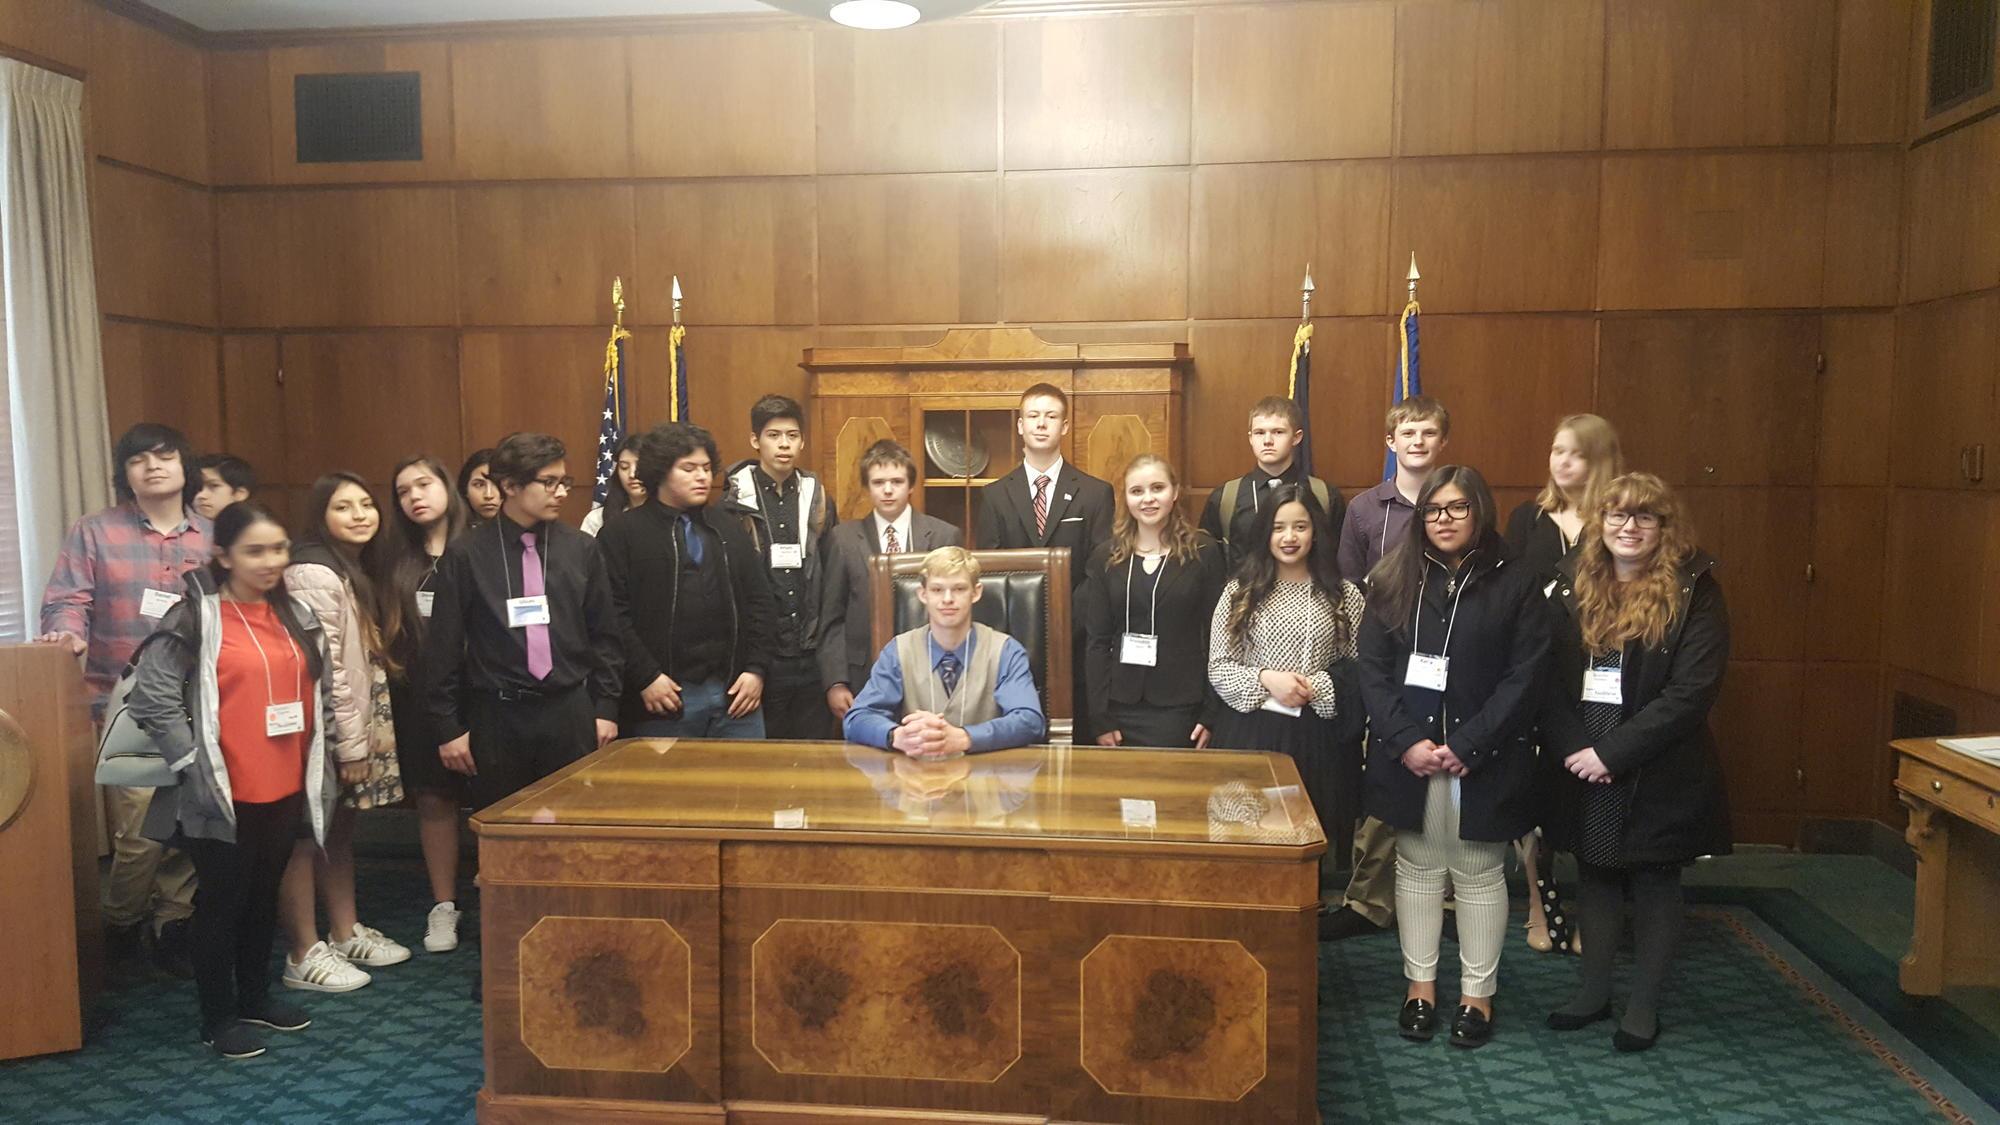 Youth gather at the Oregon Governor's large, elegant wood desk.